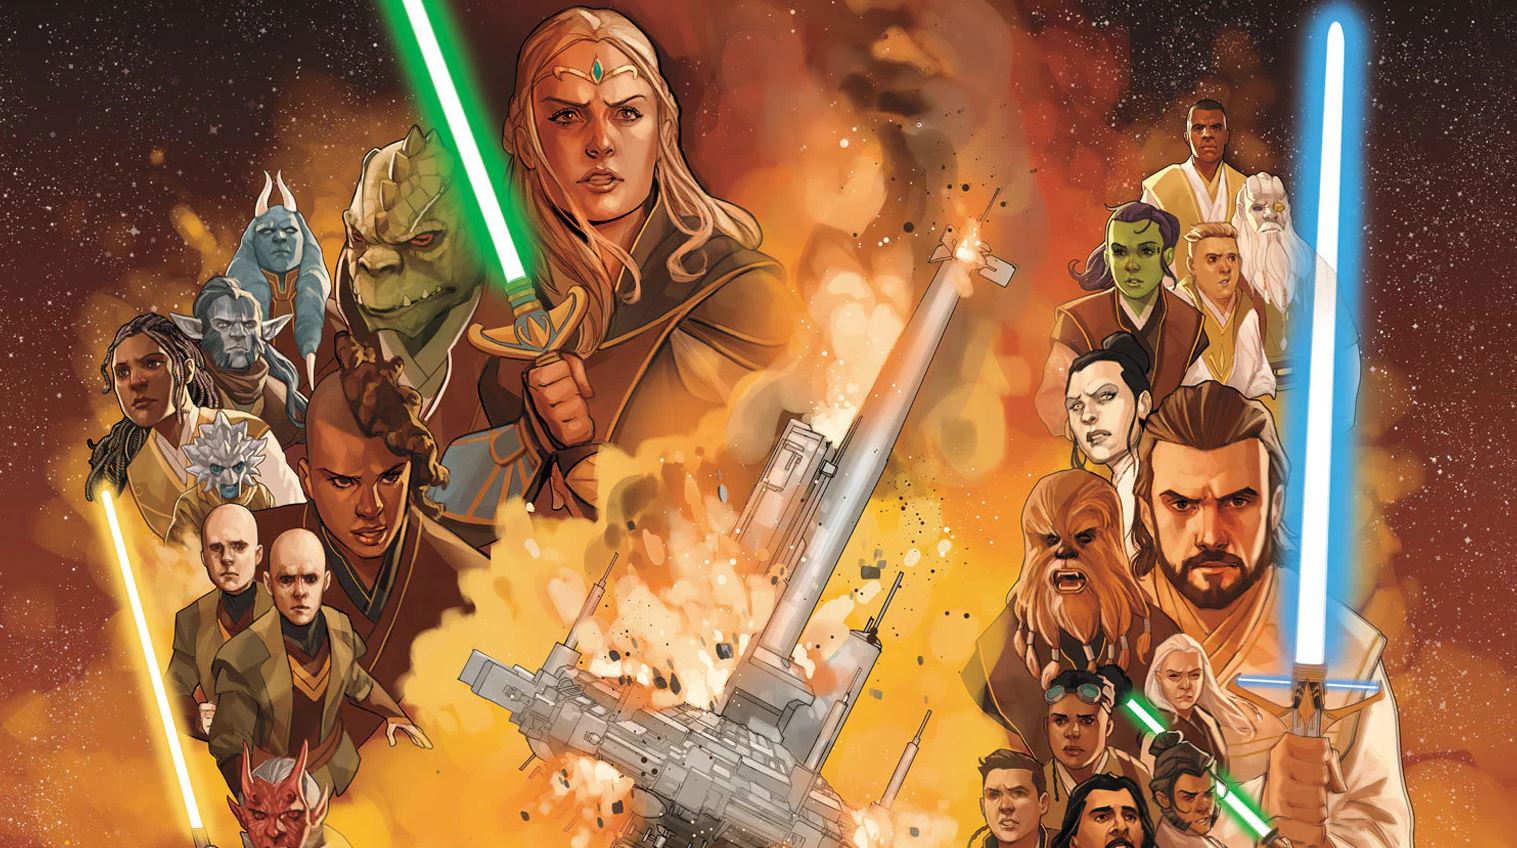 RUMOR: New Disney+ ‘Star Wars’ Series Set During The High Republic Has Begun Production